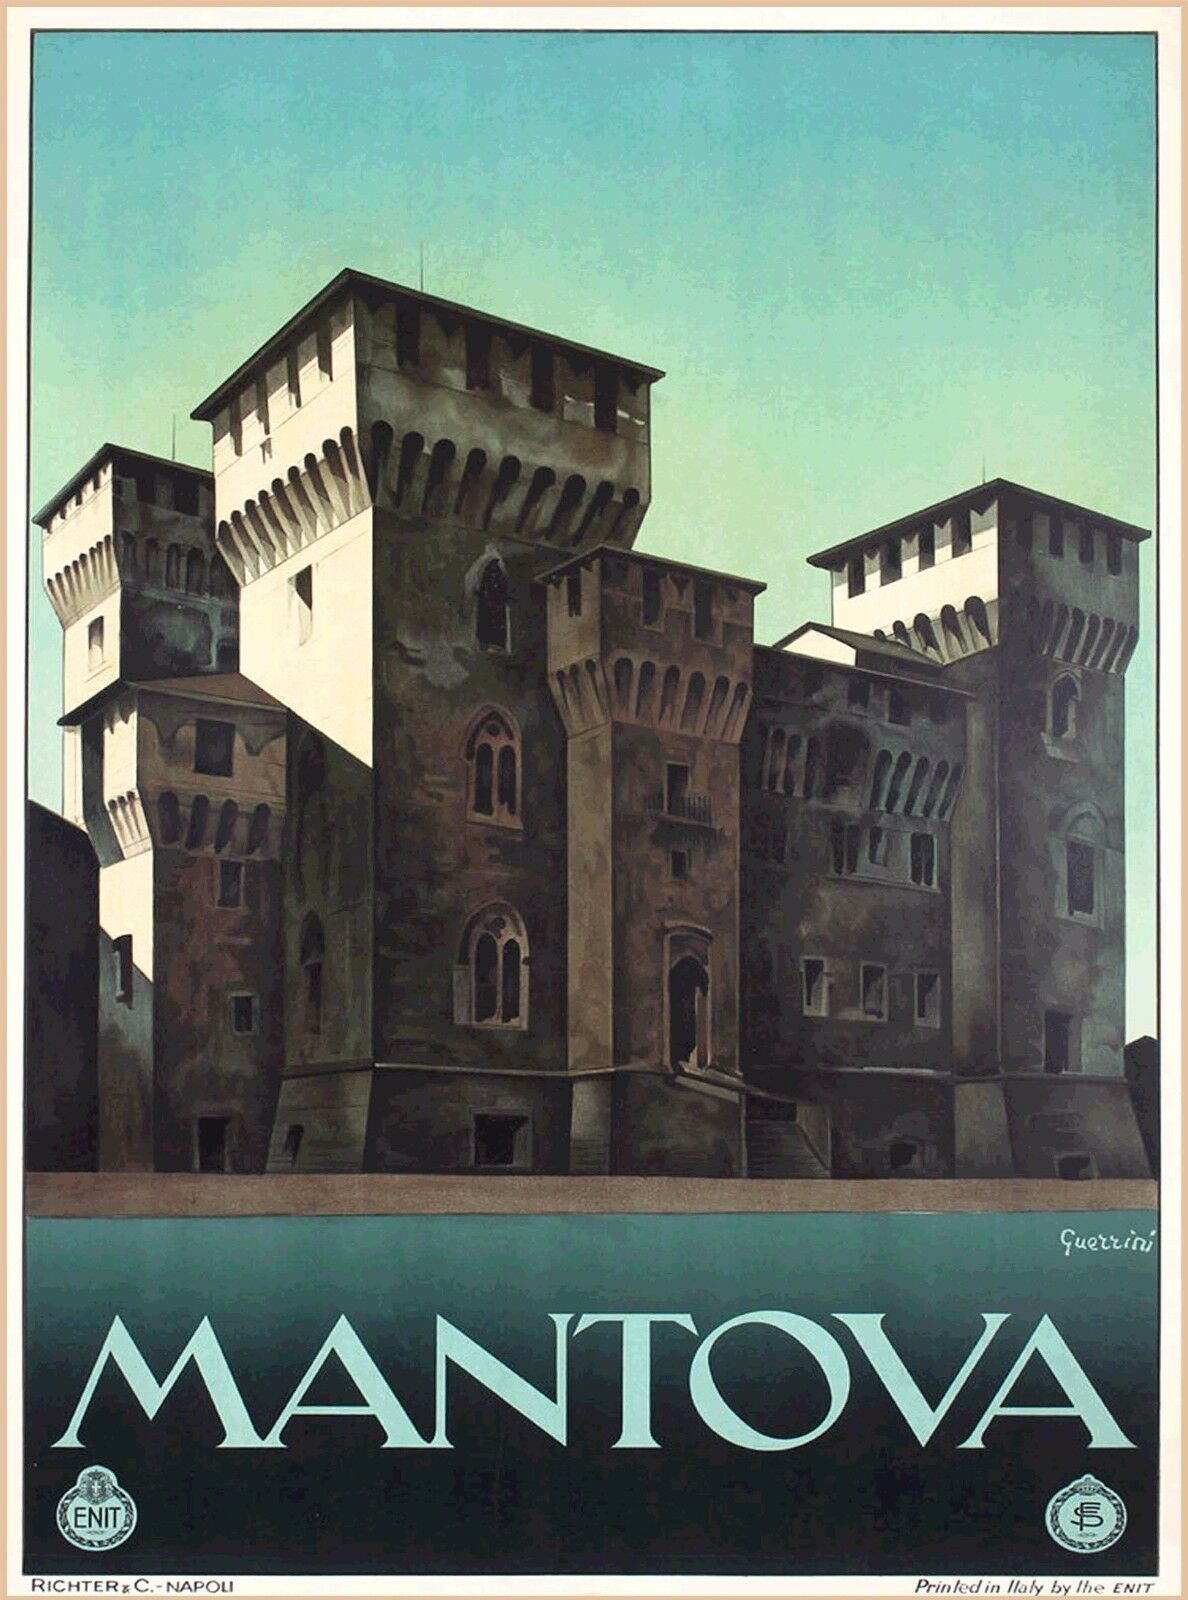 Mantua Mantova Italy Italian Europe Vintage Travel Advertisement Poster Print